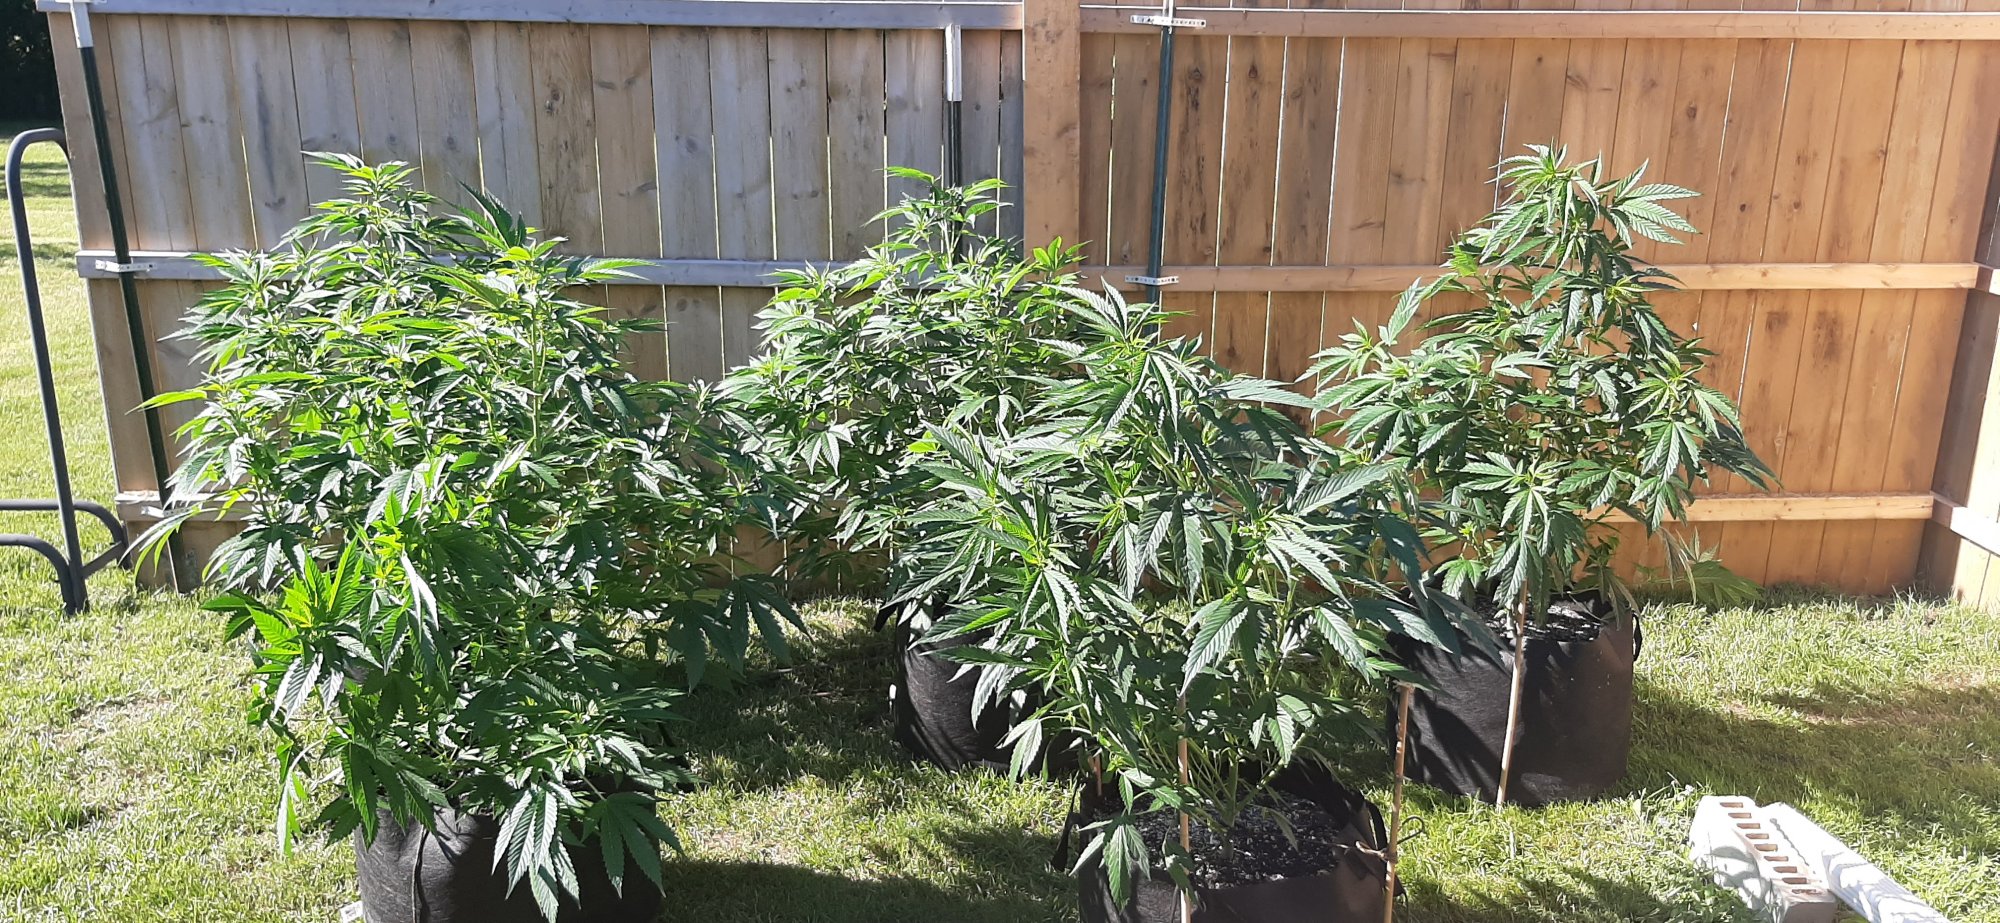 First outdoor grow using clones